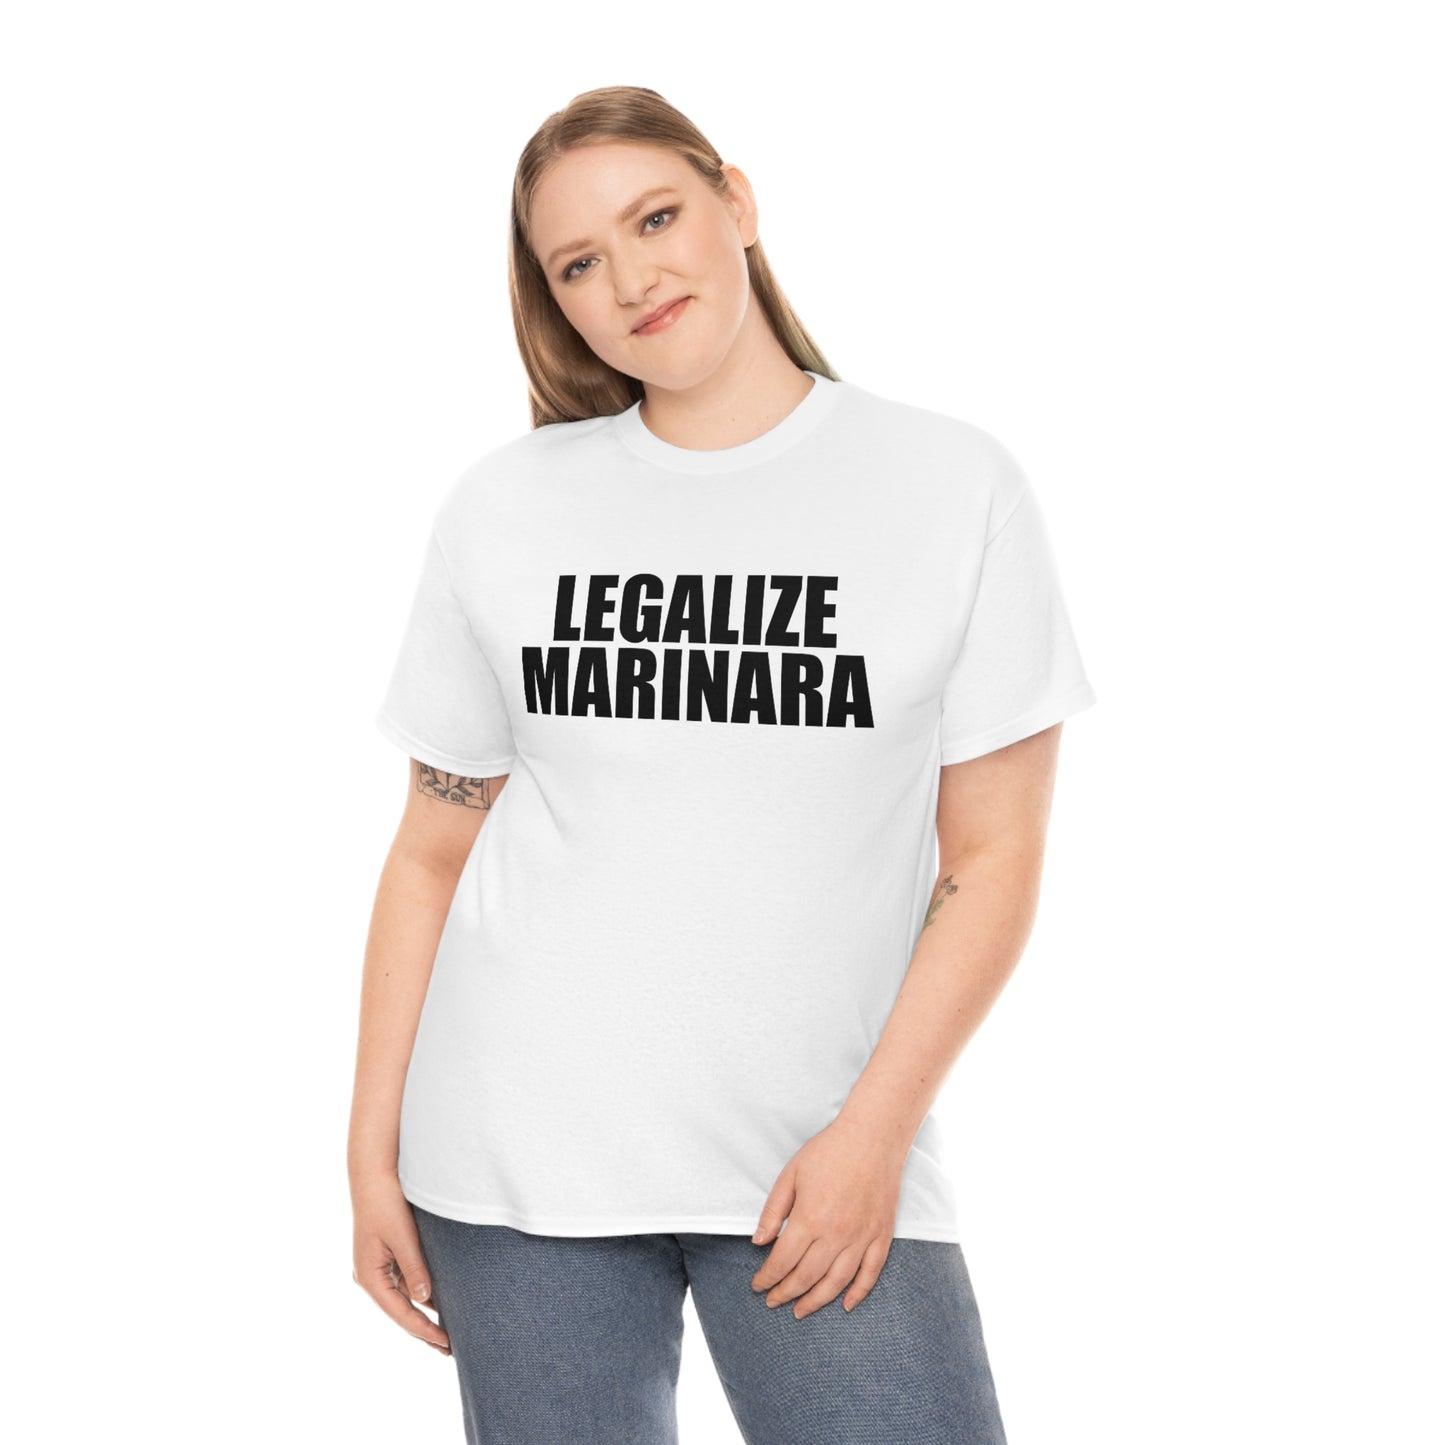 LEGALIZE MARINARA T-SHIRT